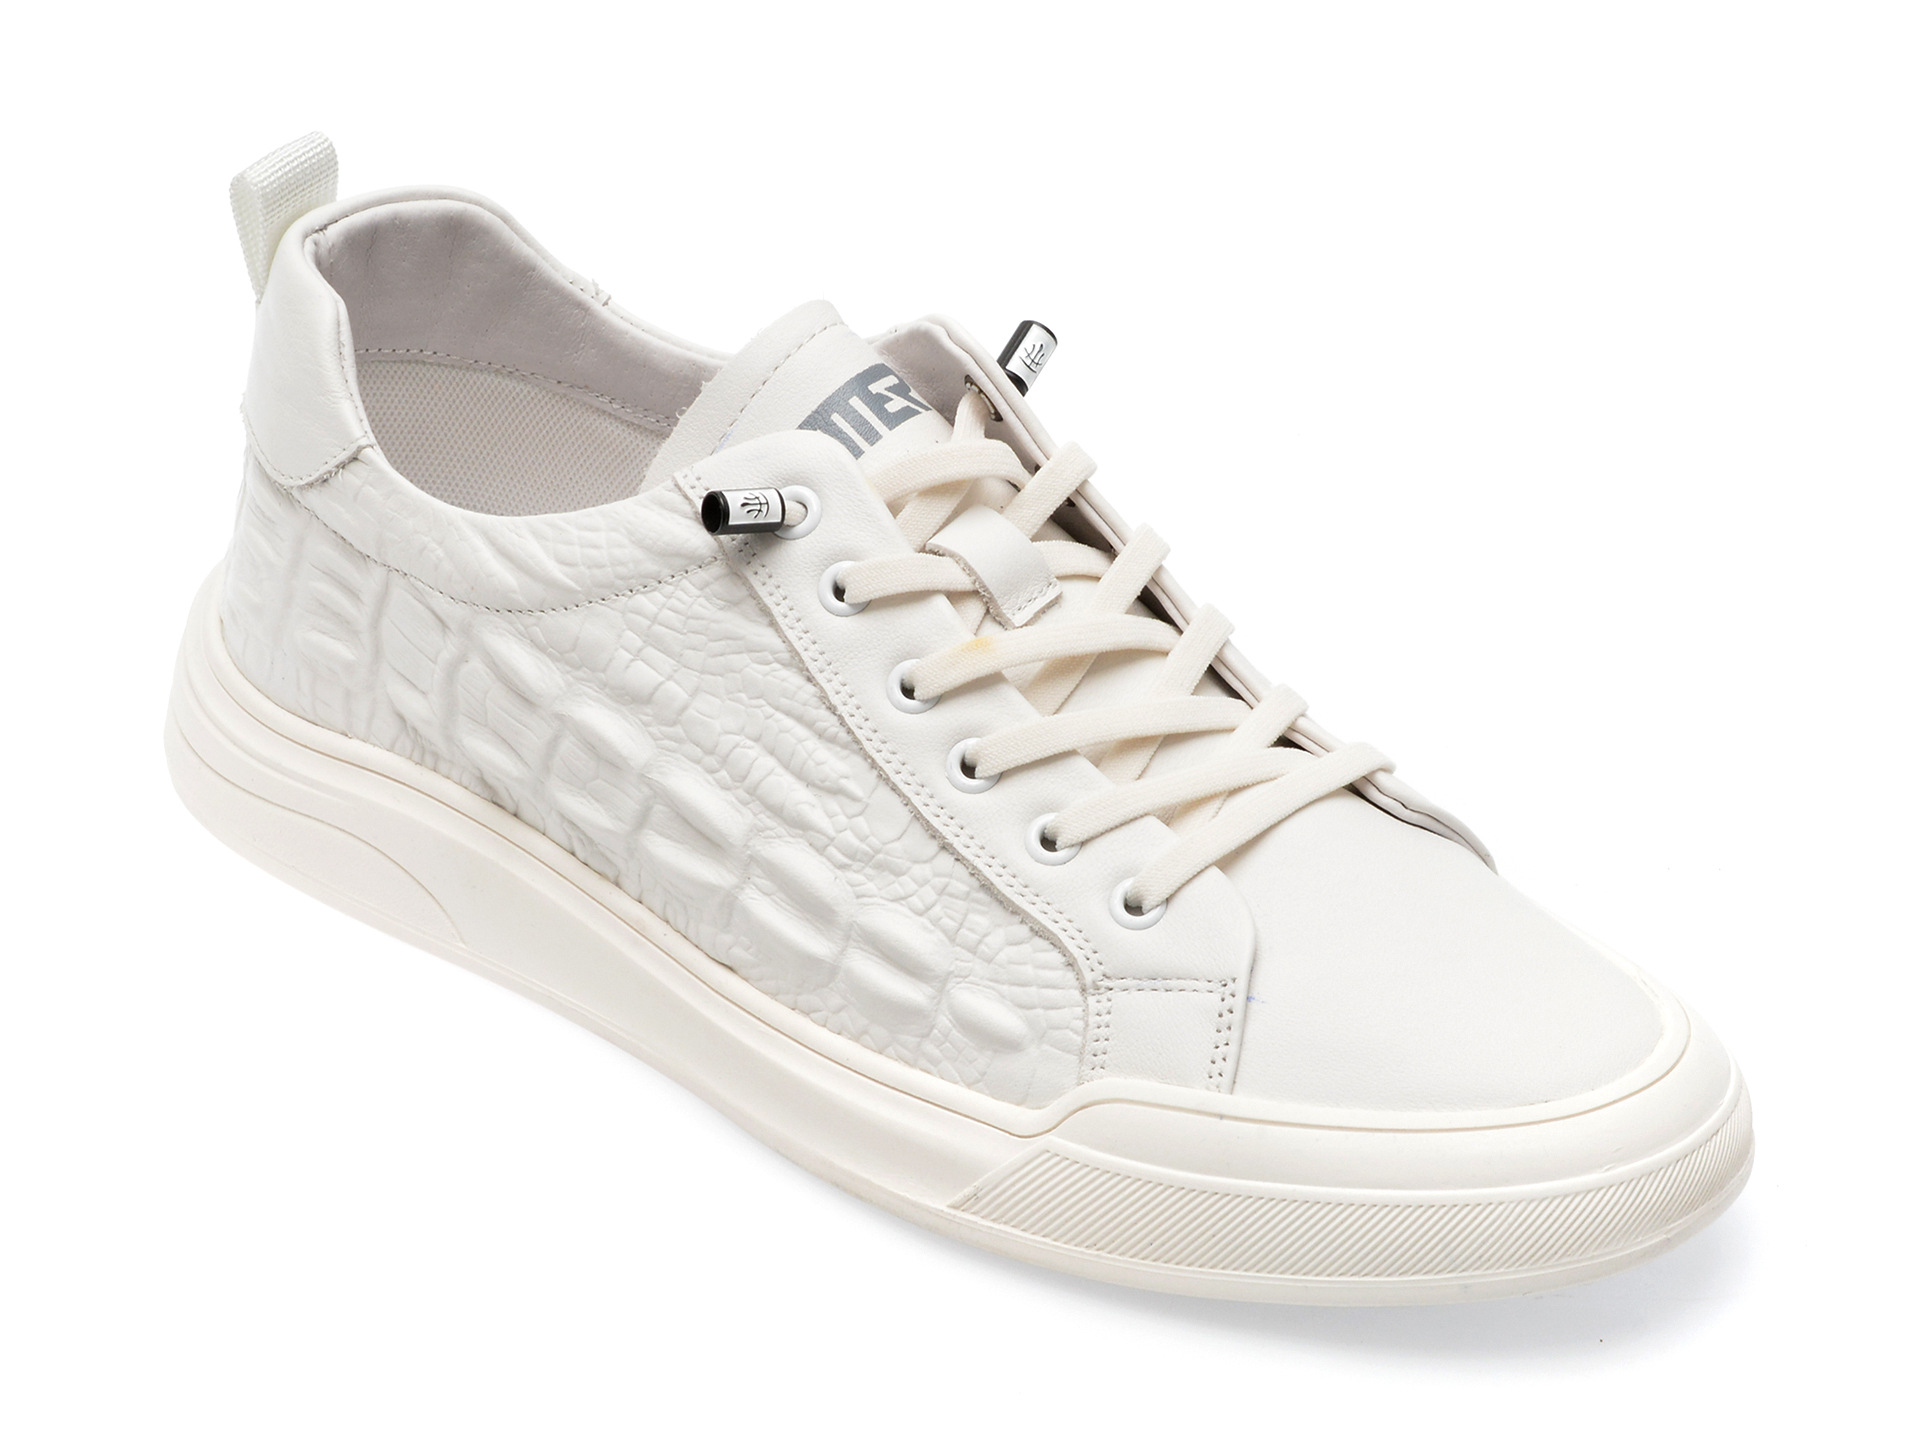 Pantofi OTTER albi, E195, din piele naturala